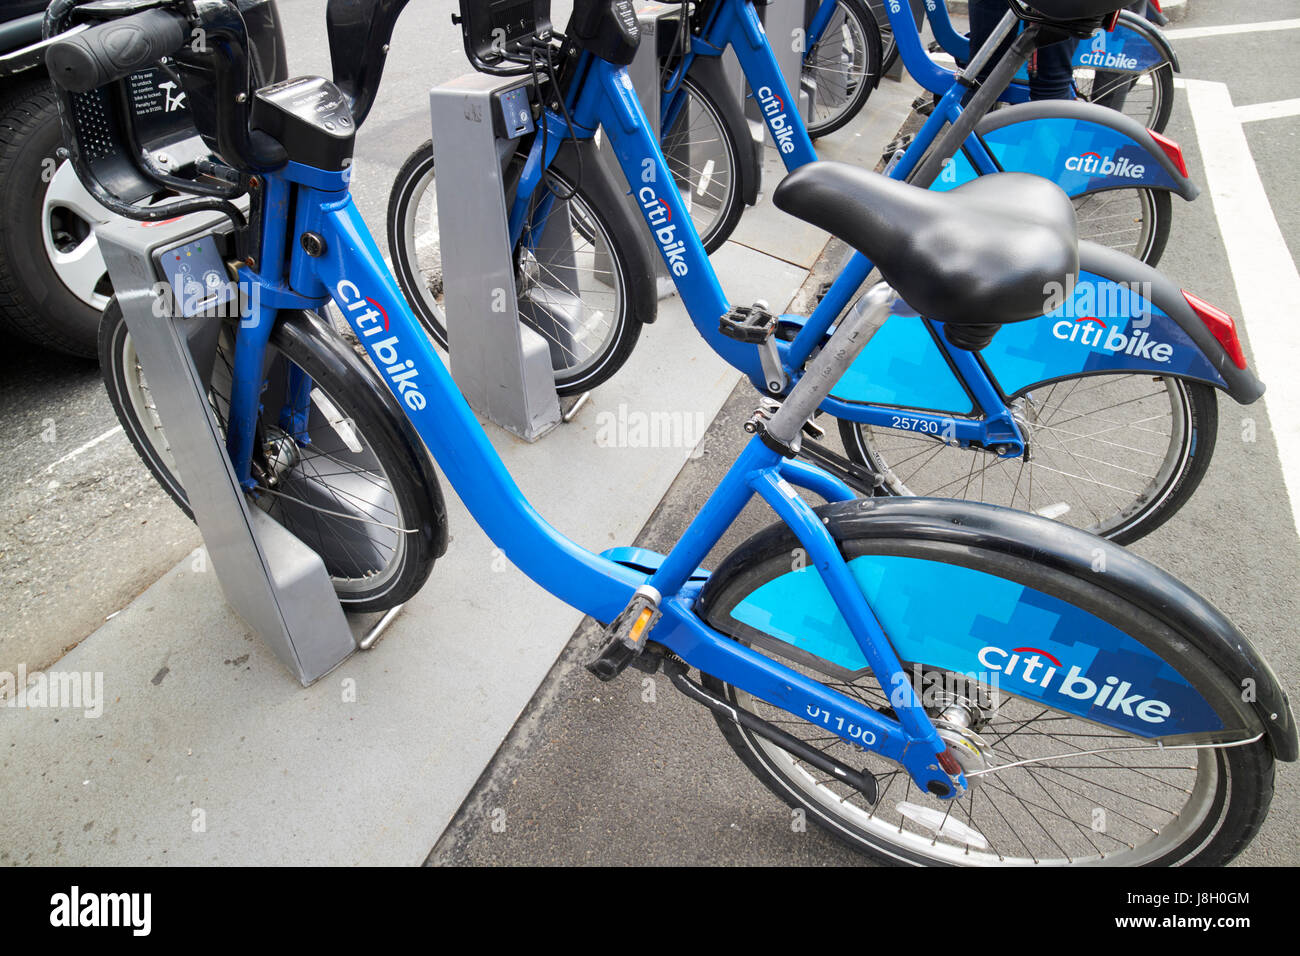 New York City USA système de location de vélo citybike Banque D'Images